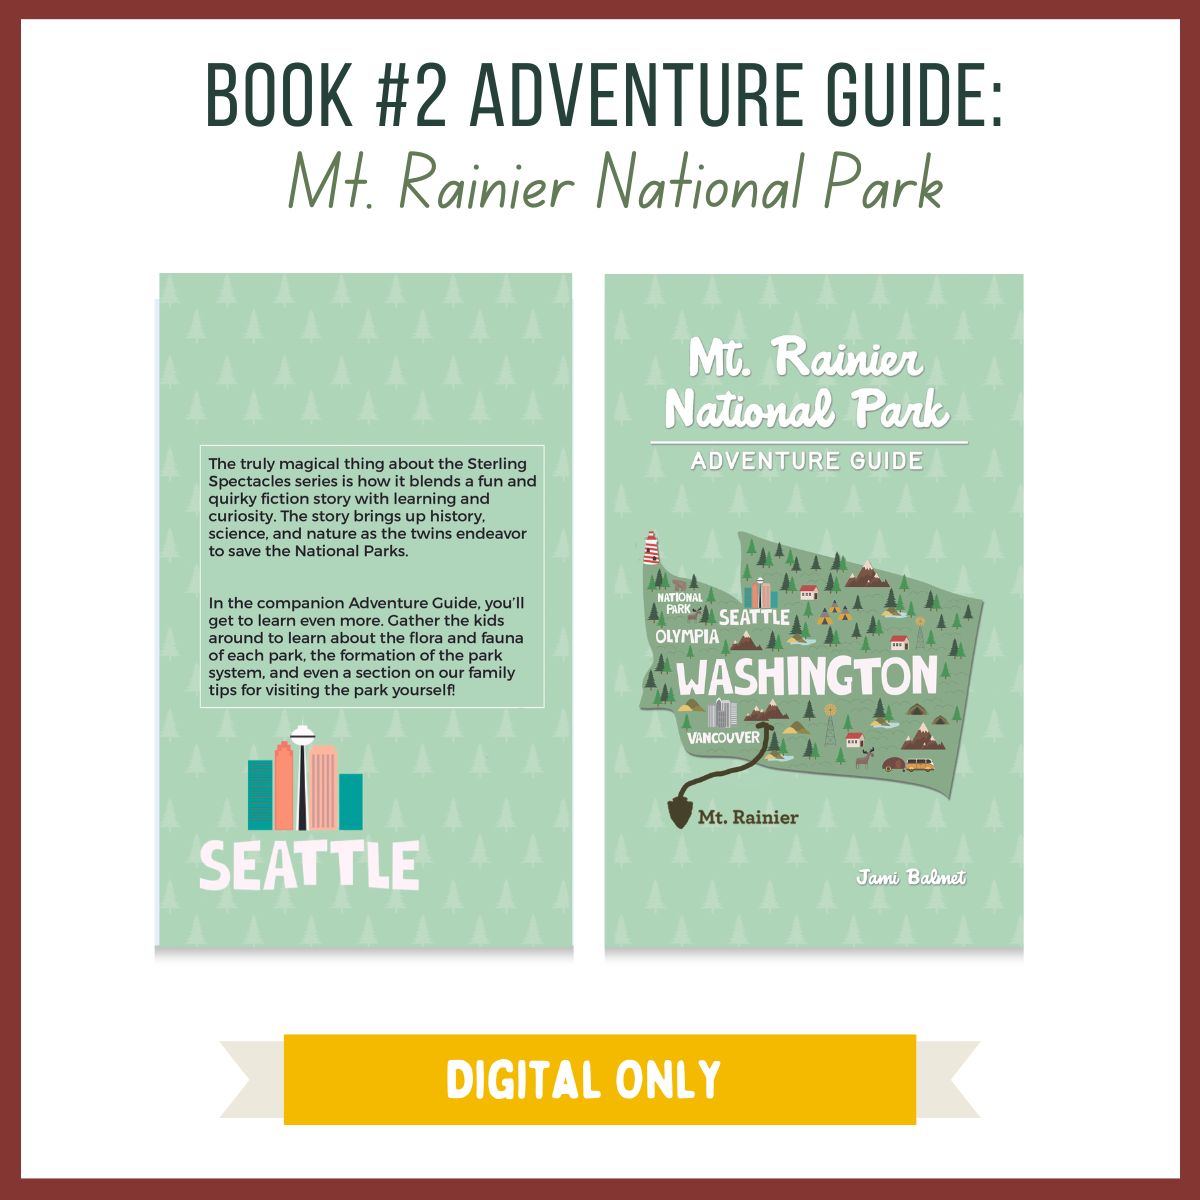 Book #2: Adventure Guide - DIGITAL